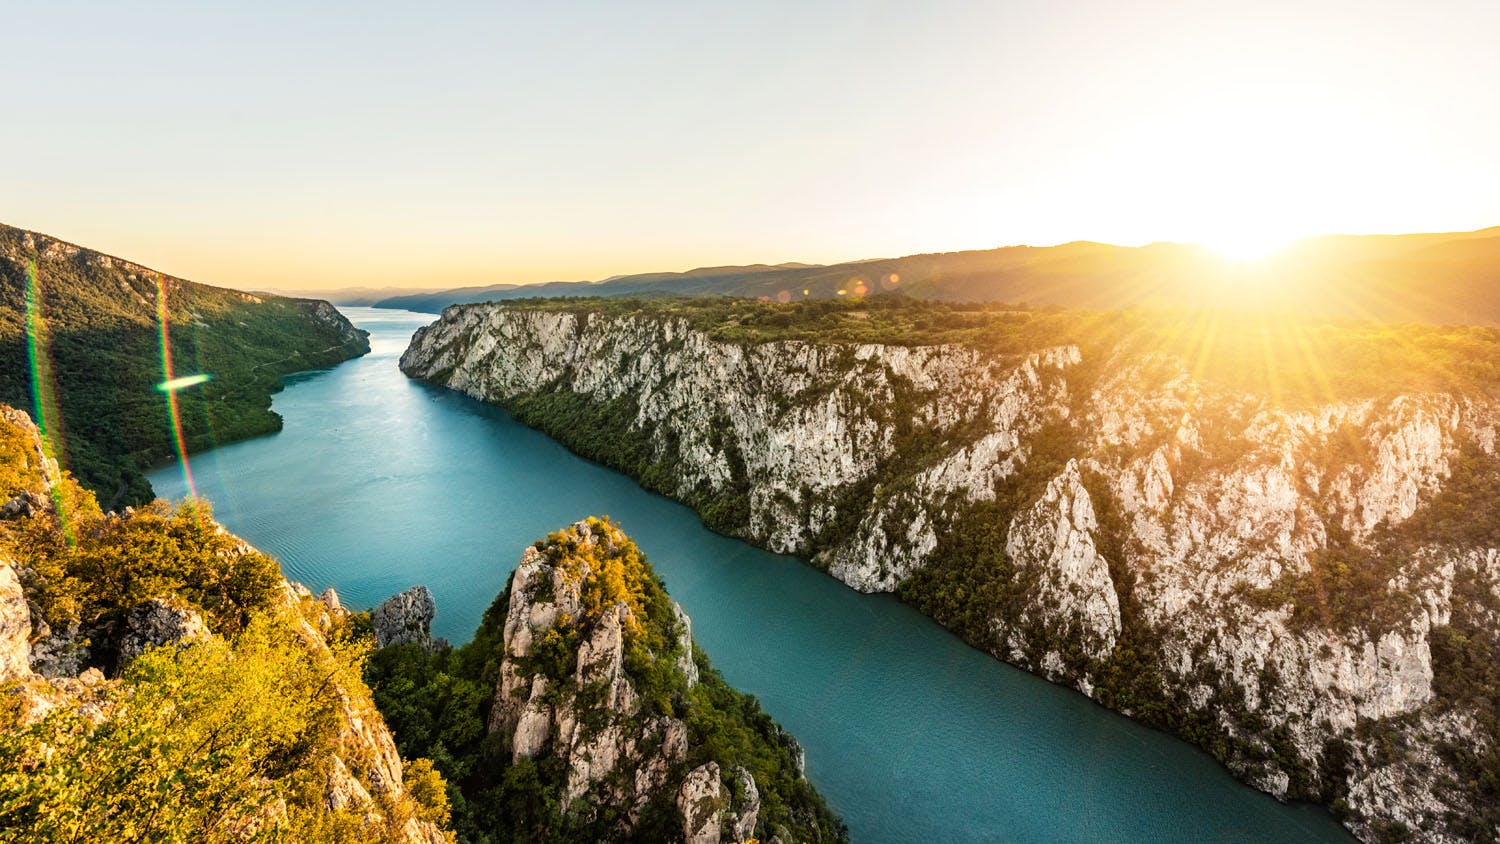 Danube River - Djerdap Gorge